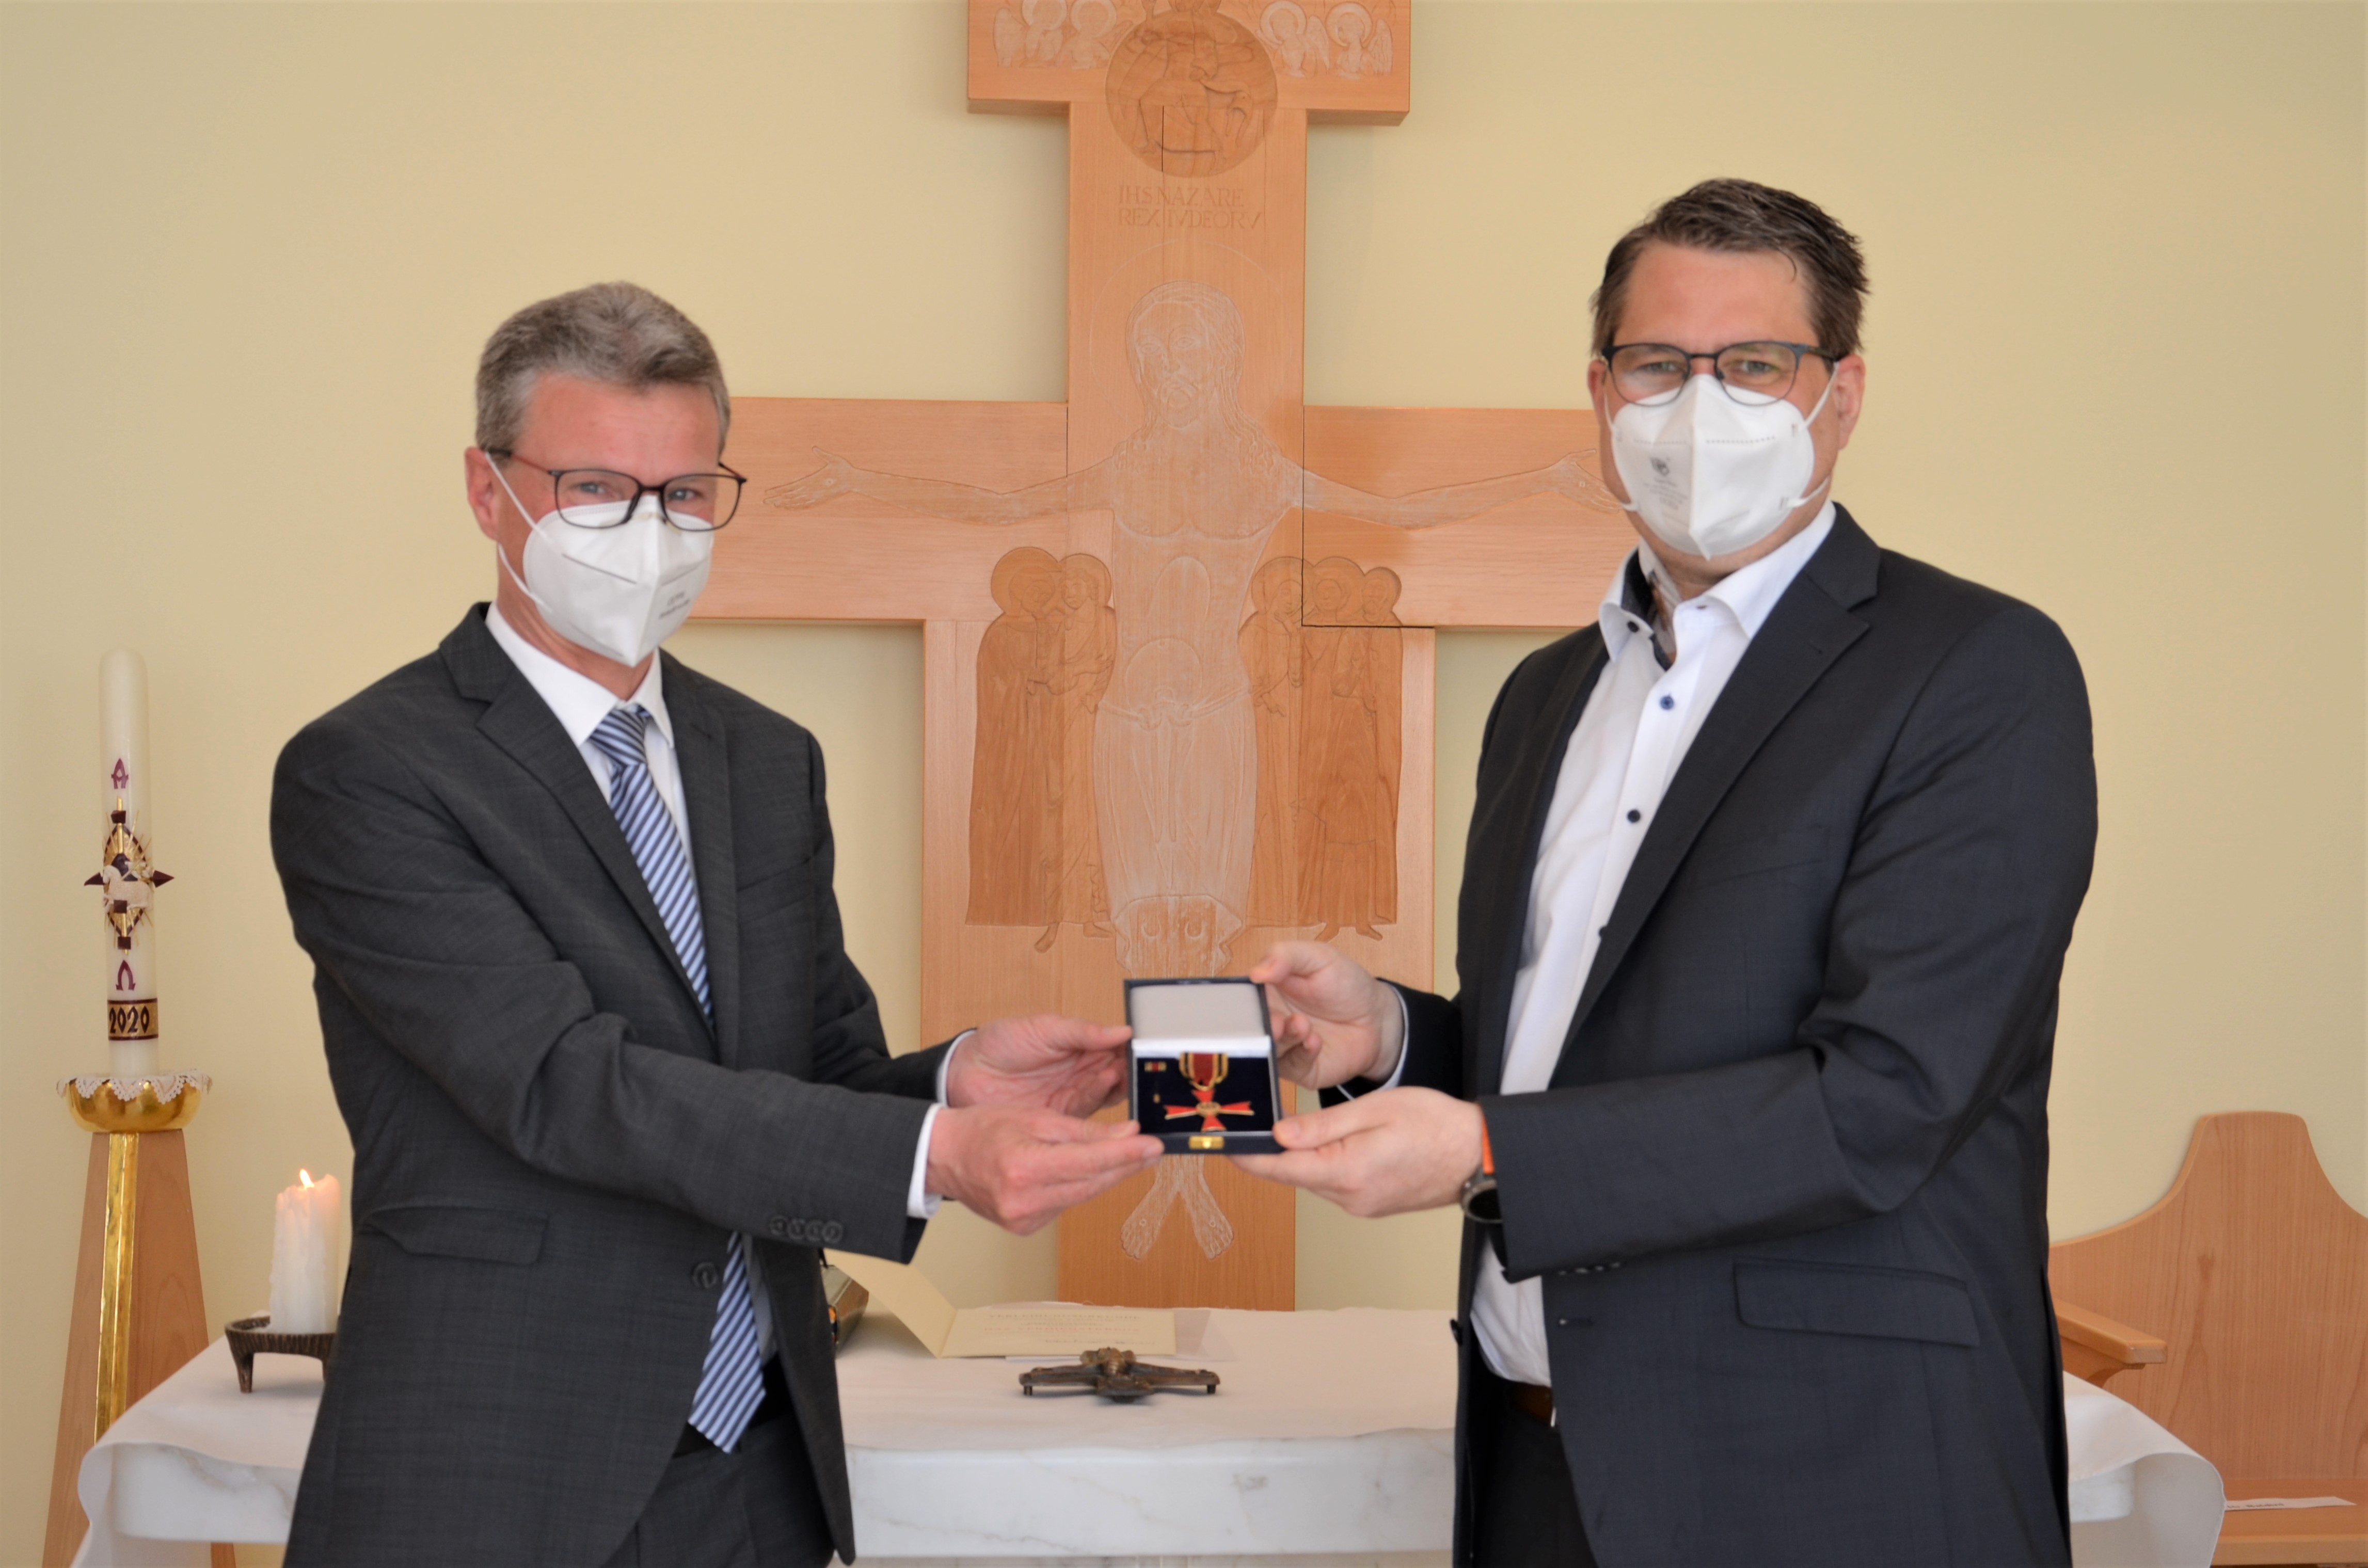 2021 03 31 Staatsminister Sibler übergibt Bundesverdienstkreuz an Matthias Keller